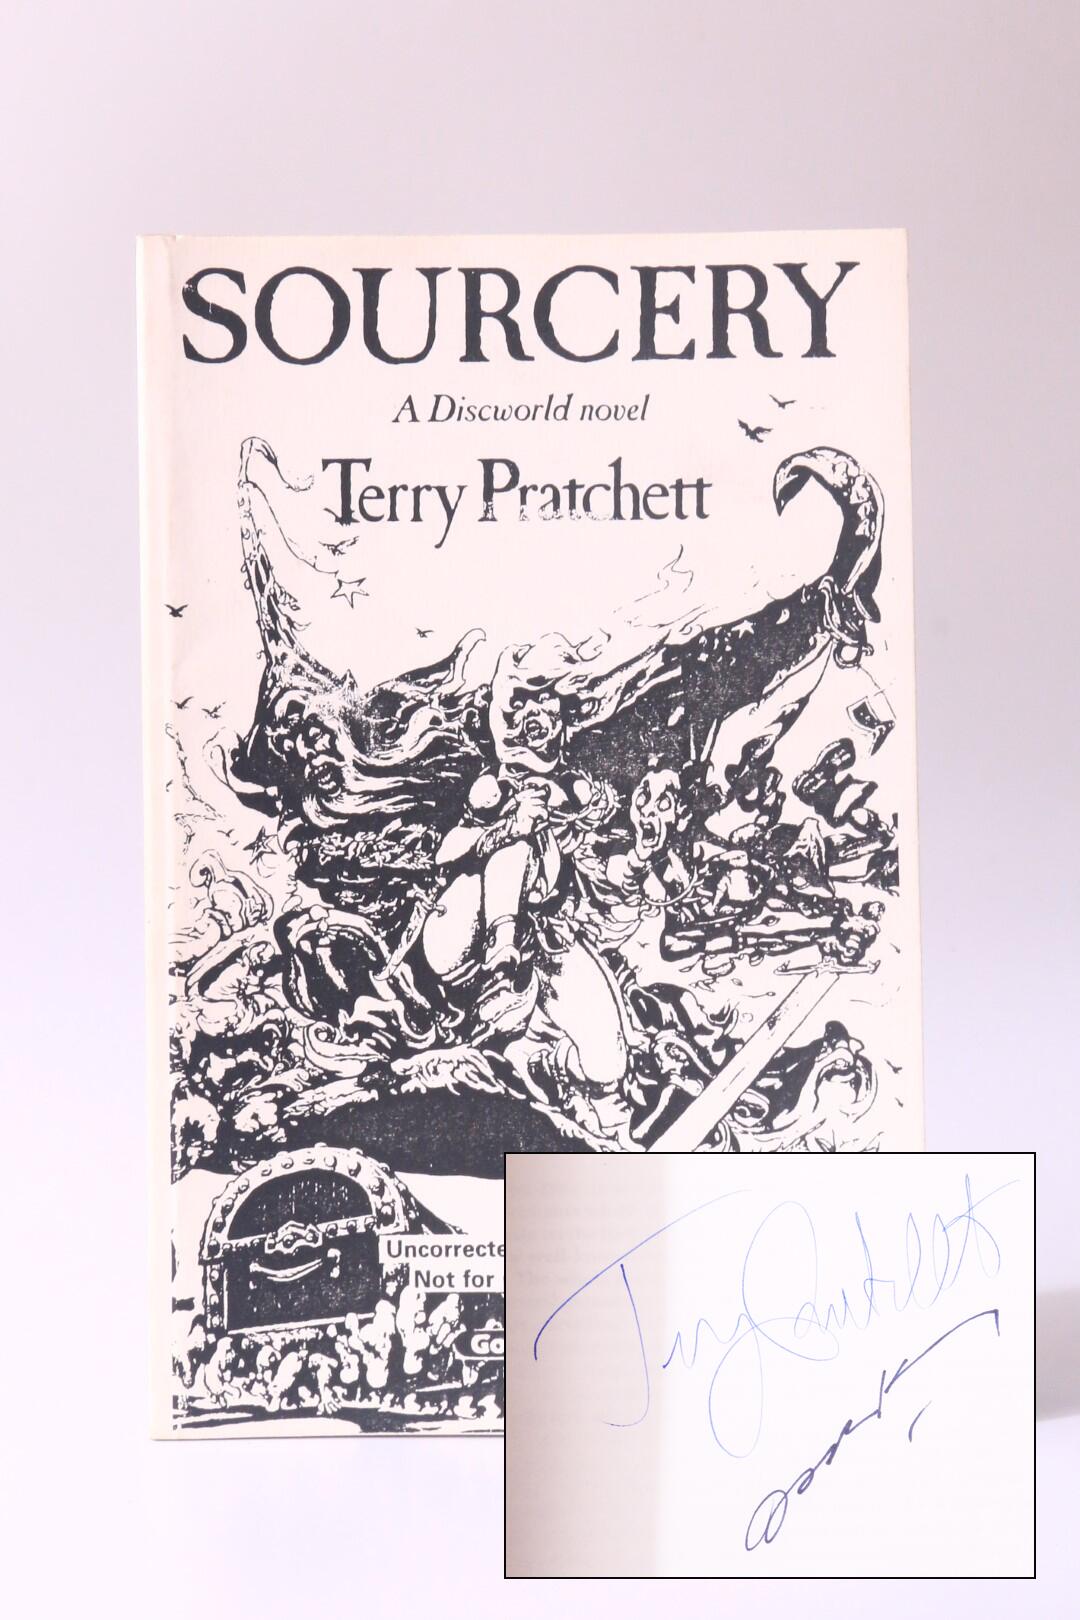 Terry Pratchett - Sourcery - Gollancz, 1988, Signed proof.